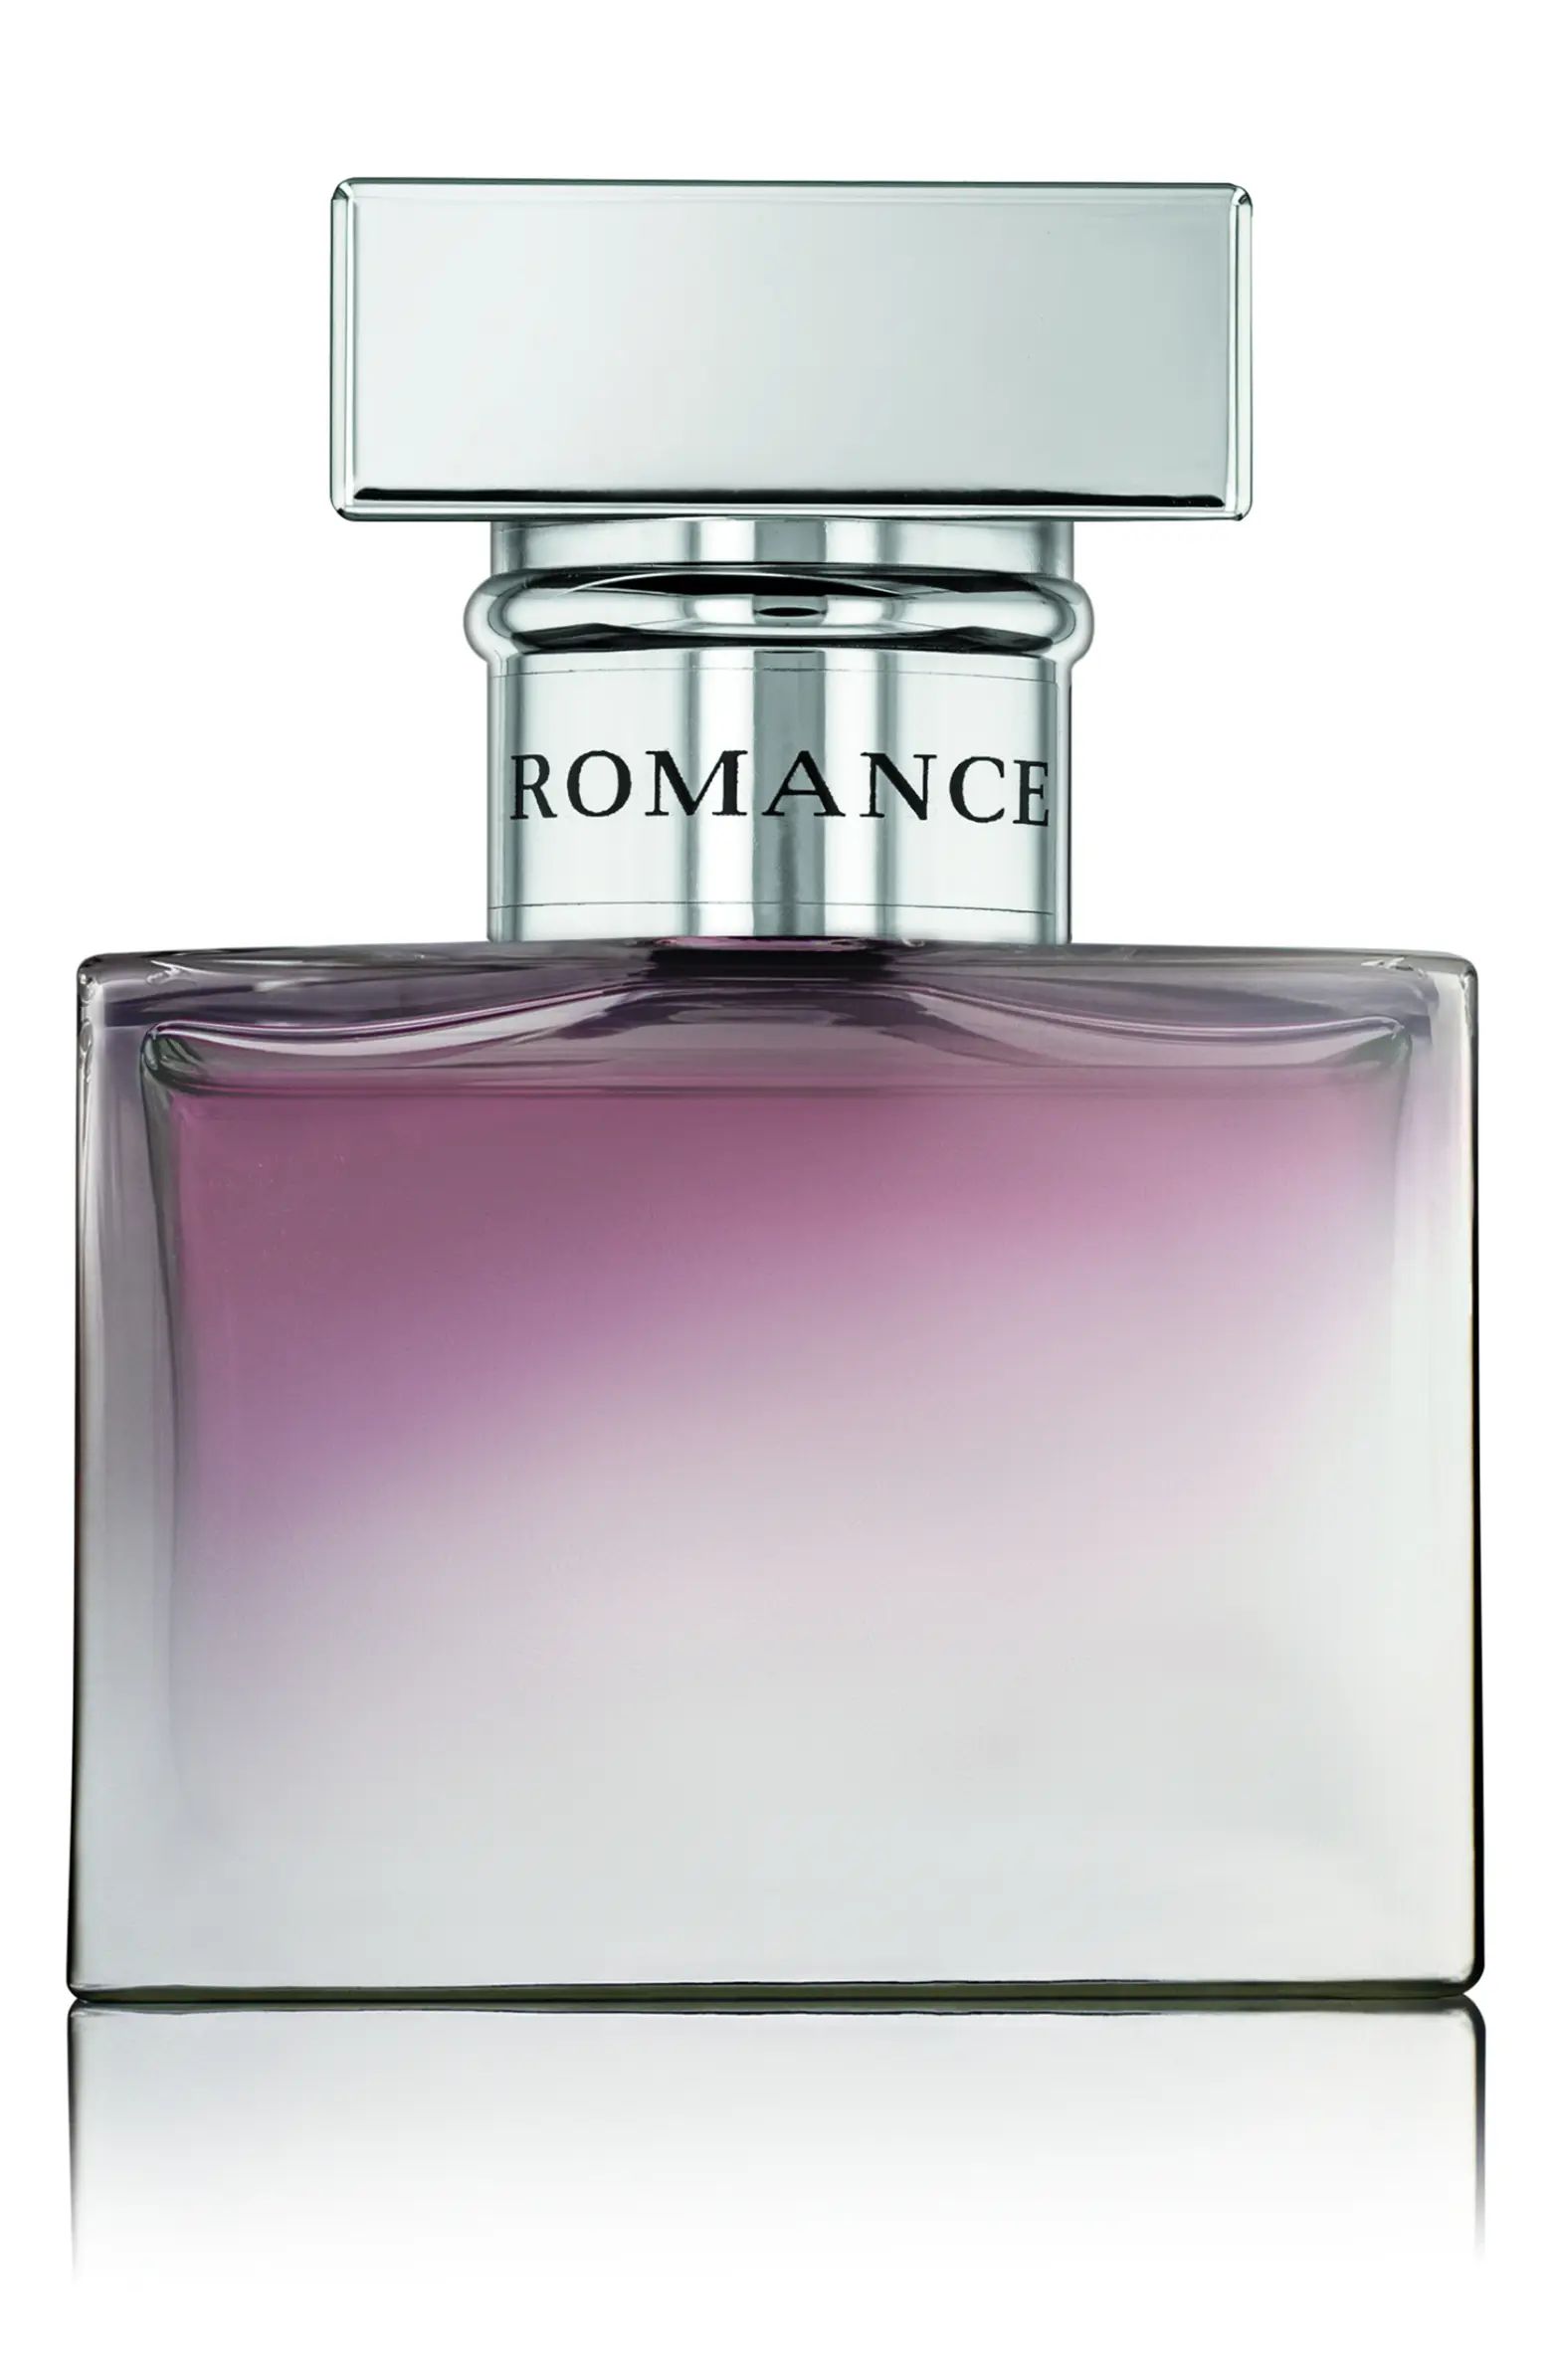 Romance Parfum | Nordstrom